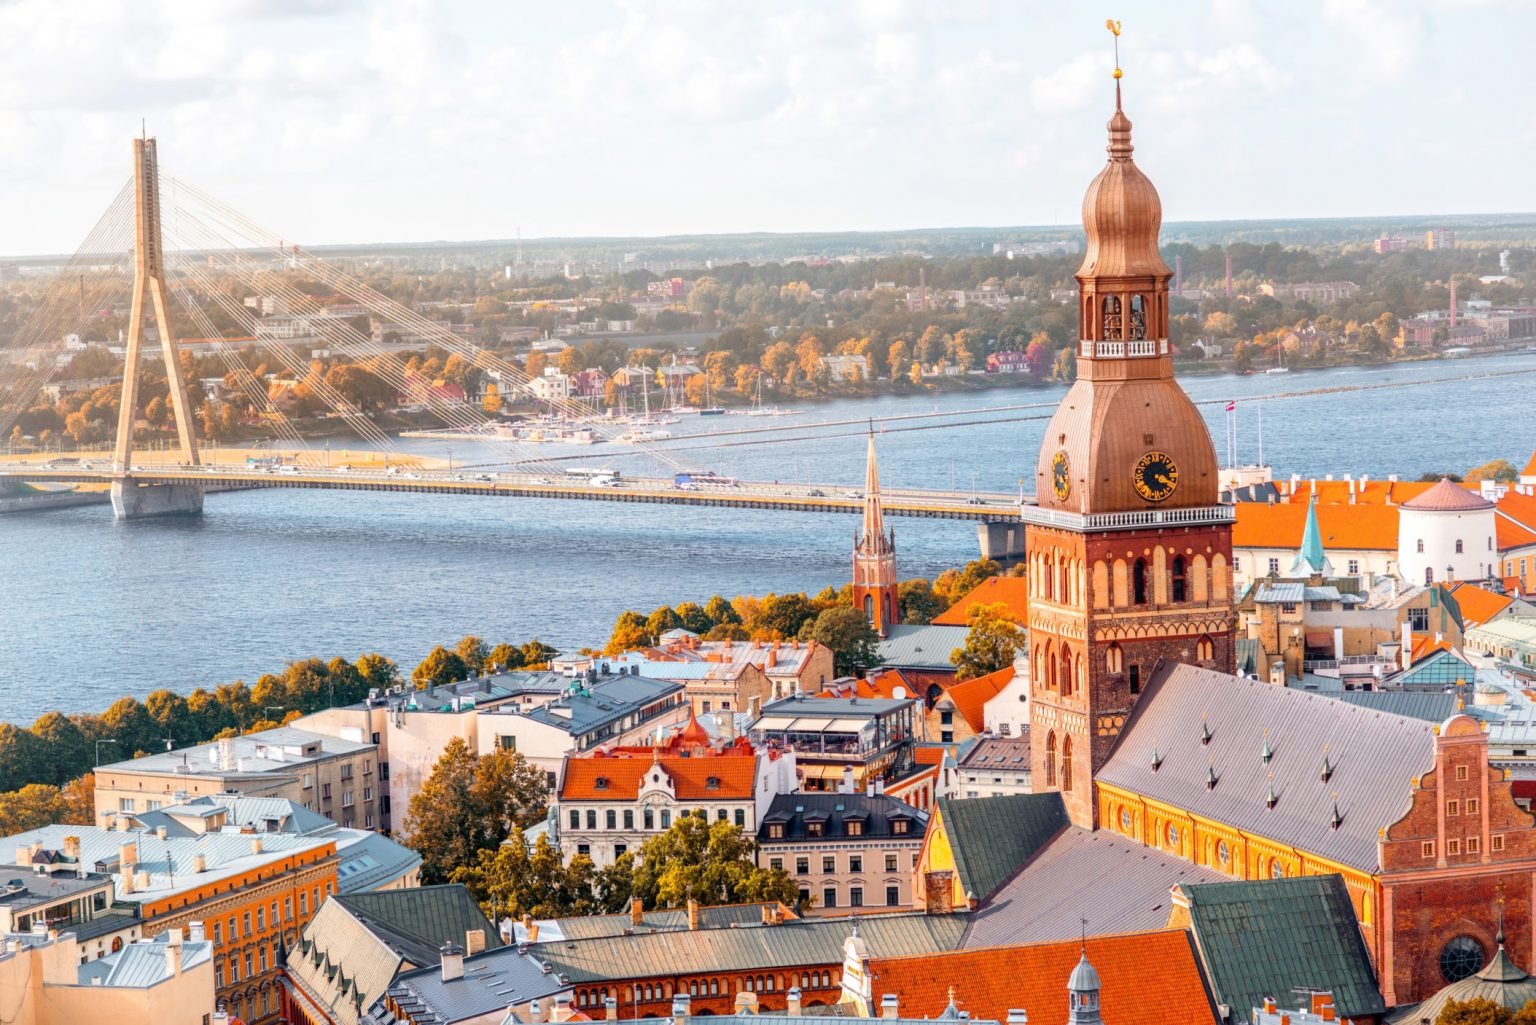 Latvia Europe must visit place